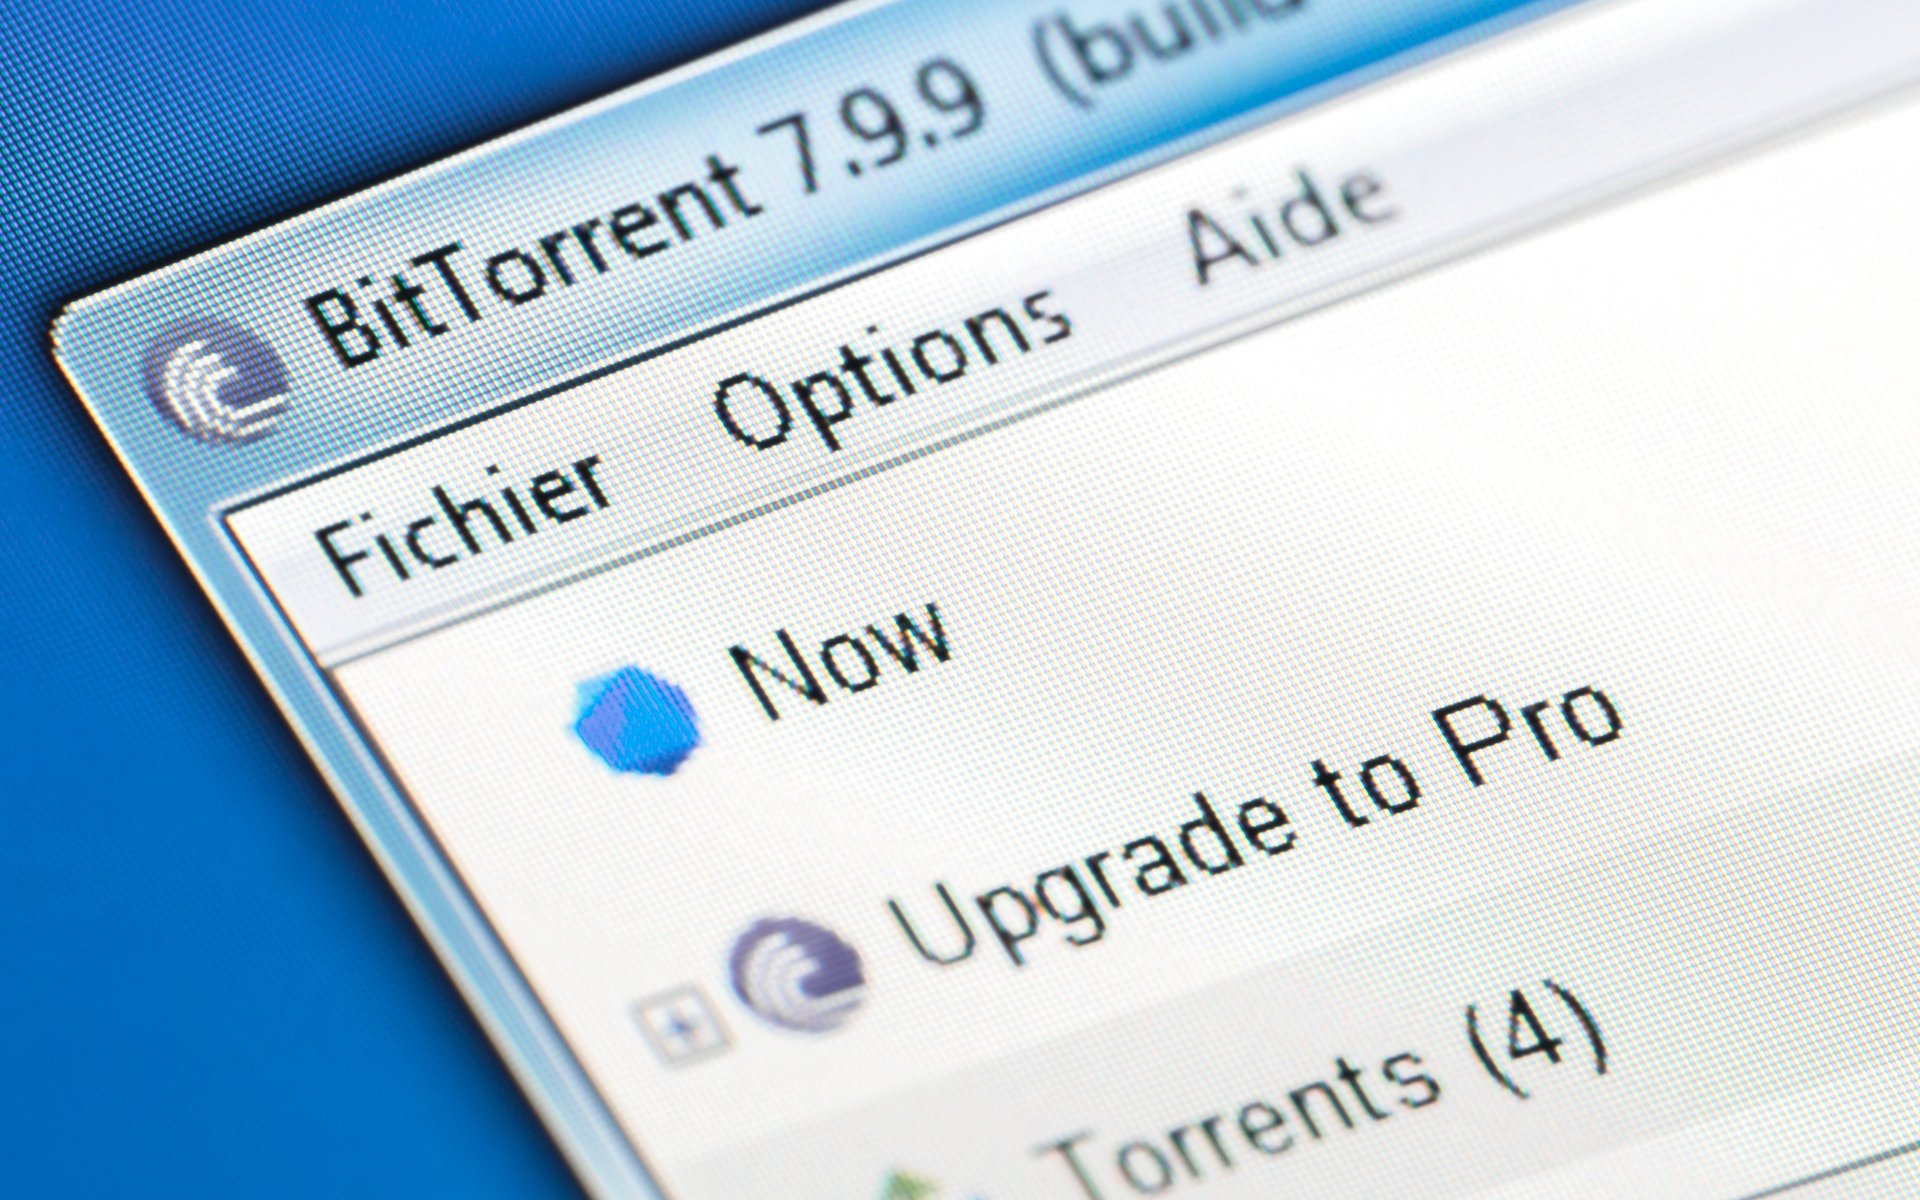 TRON Acquires BitTorrent, Price Fails to React